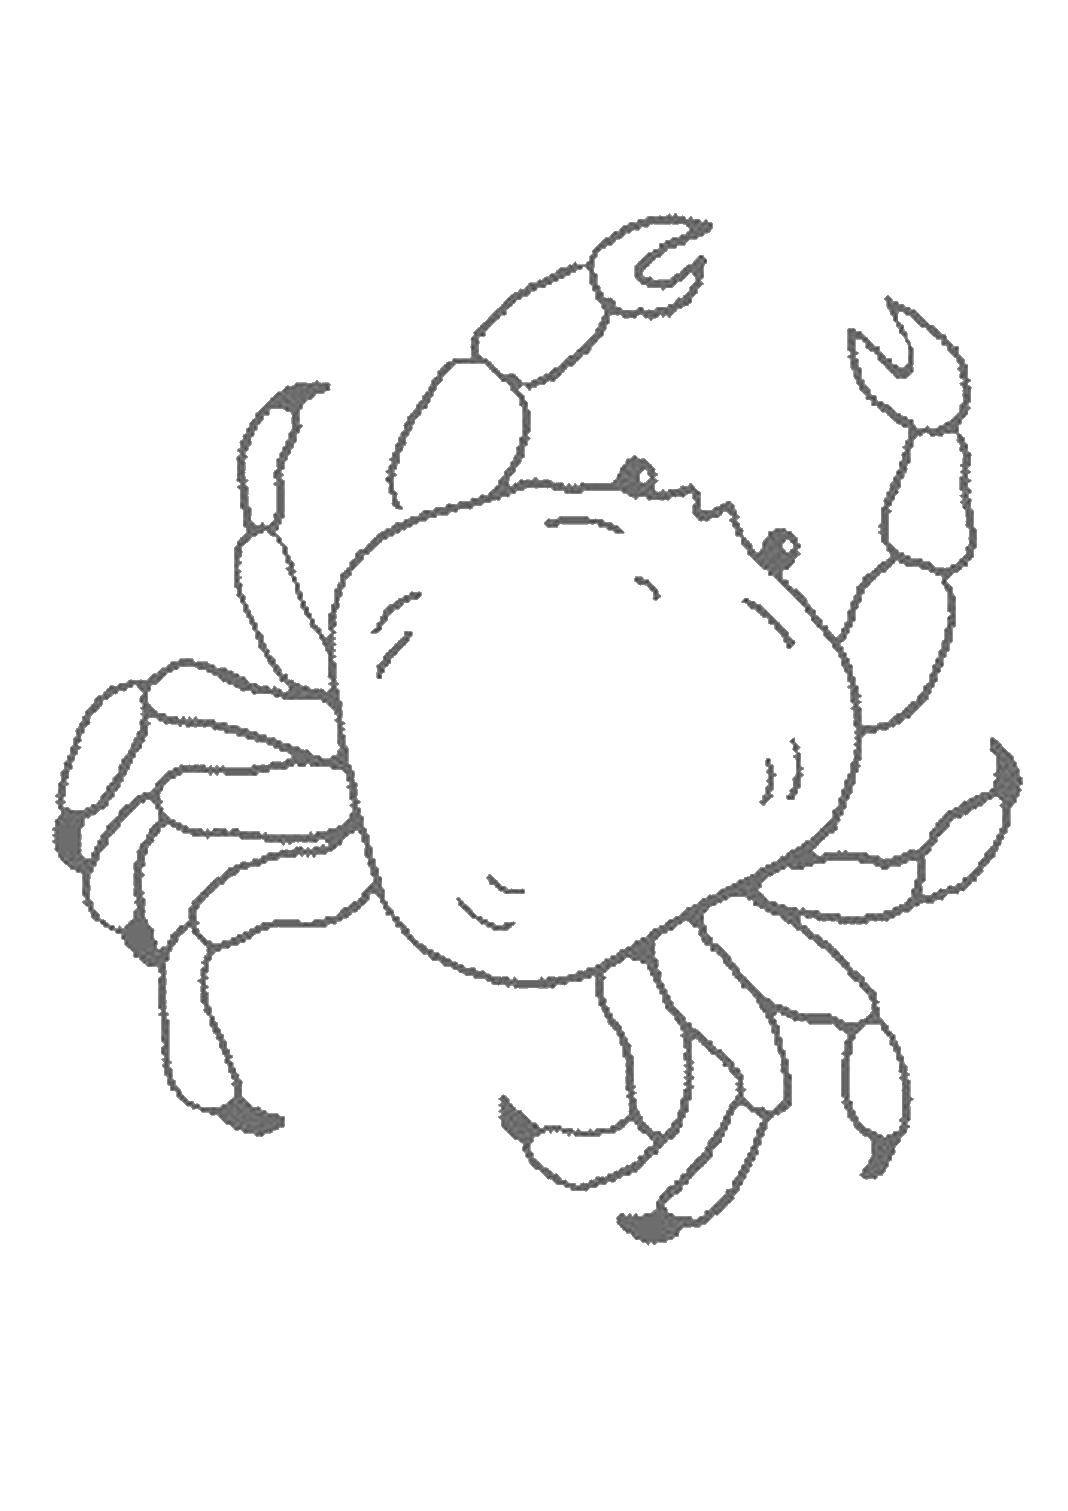 Coloring Crab.. Category Crab. Tags:  crabs, animals, sea animals.